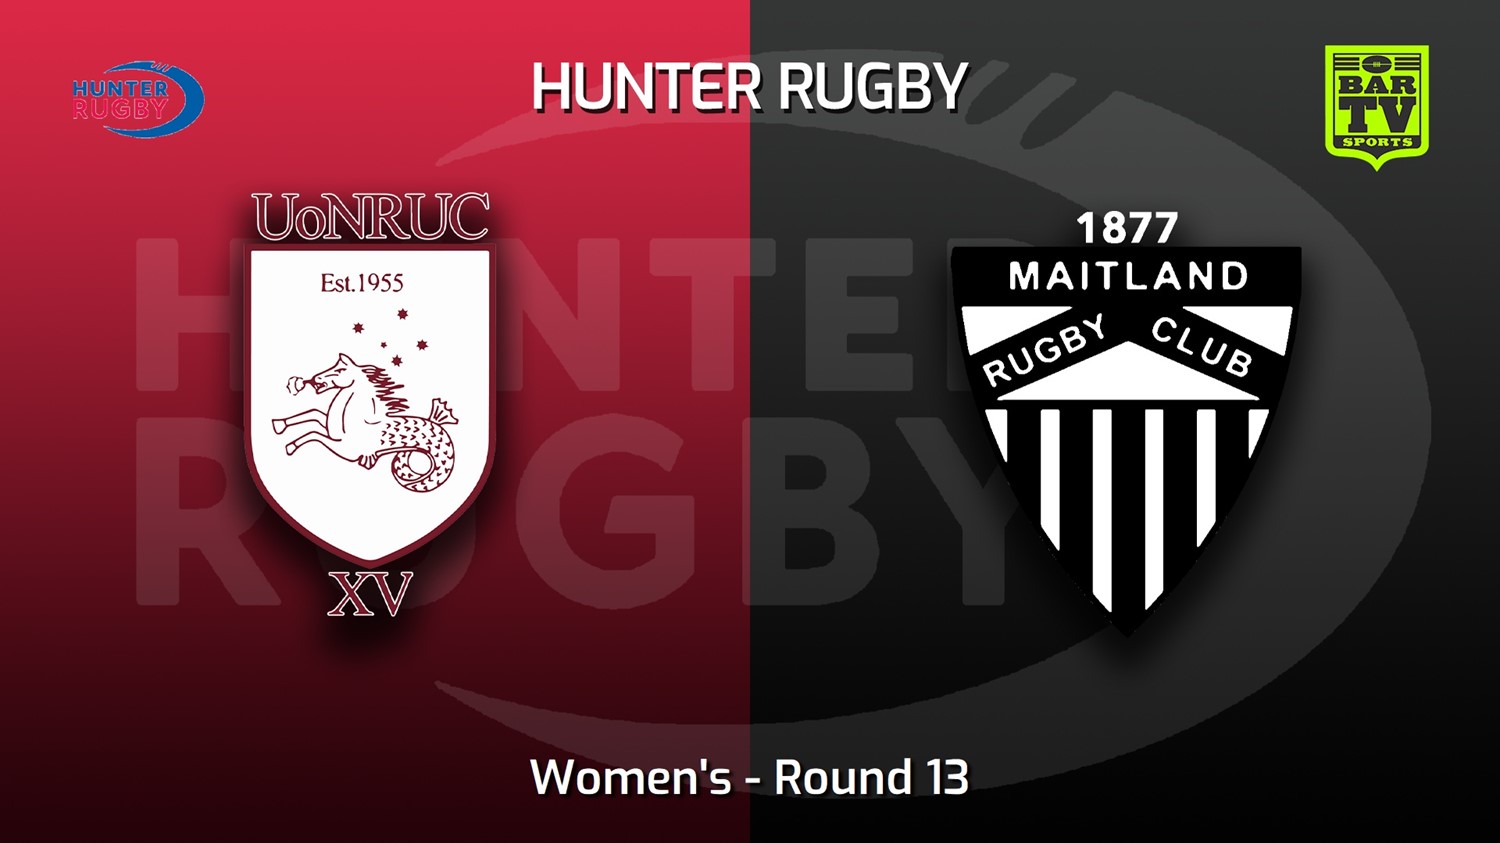 220721-Hunter Rugby Round 13 - Women's - University Of Newcastle v Maitland Slate Image